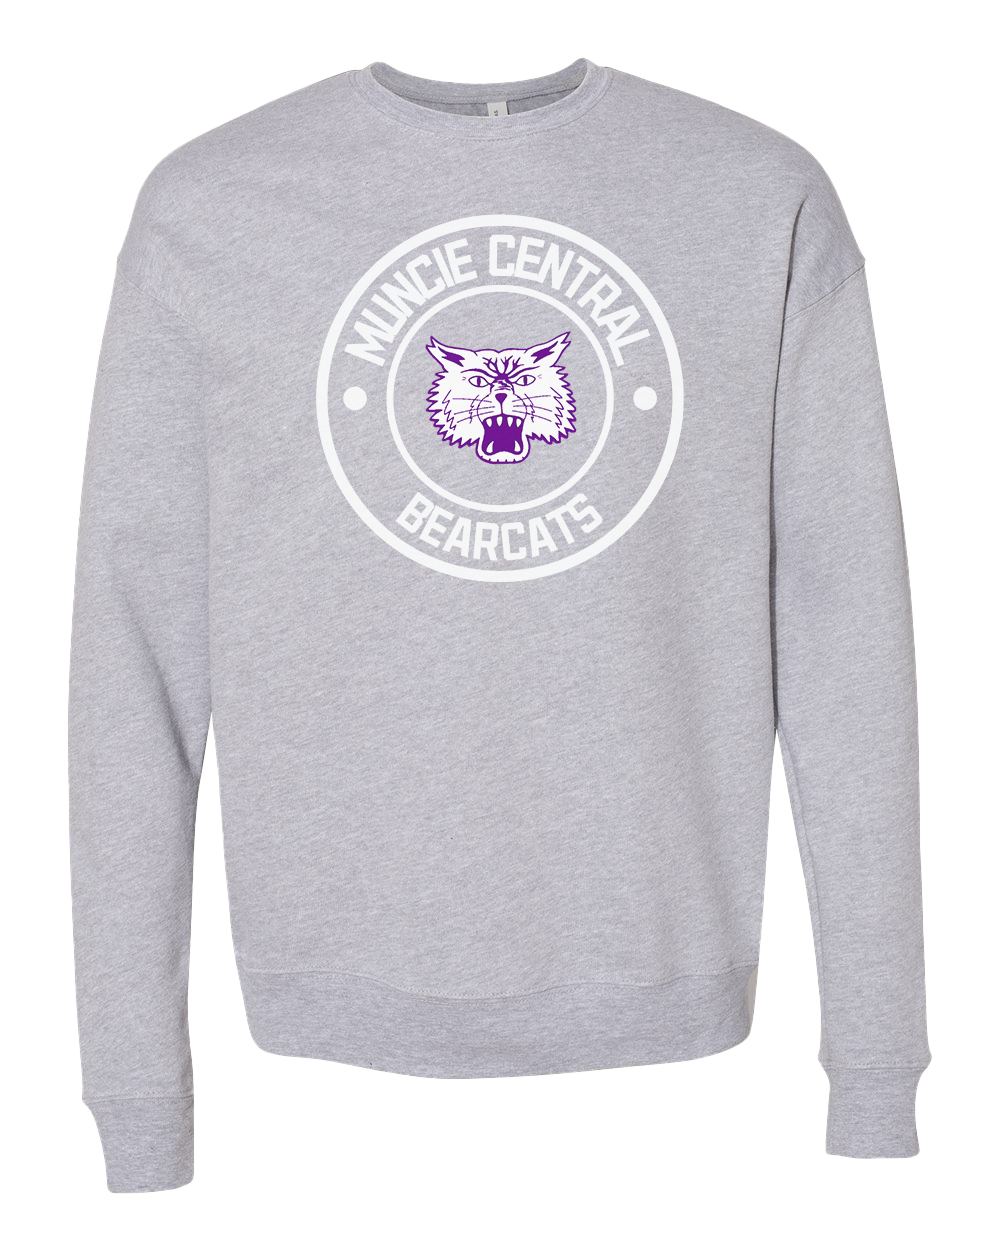 Muncie Central Bearcats Round Logo Sweatshirt - Athletic Heather